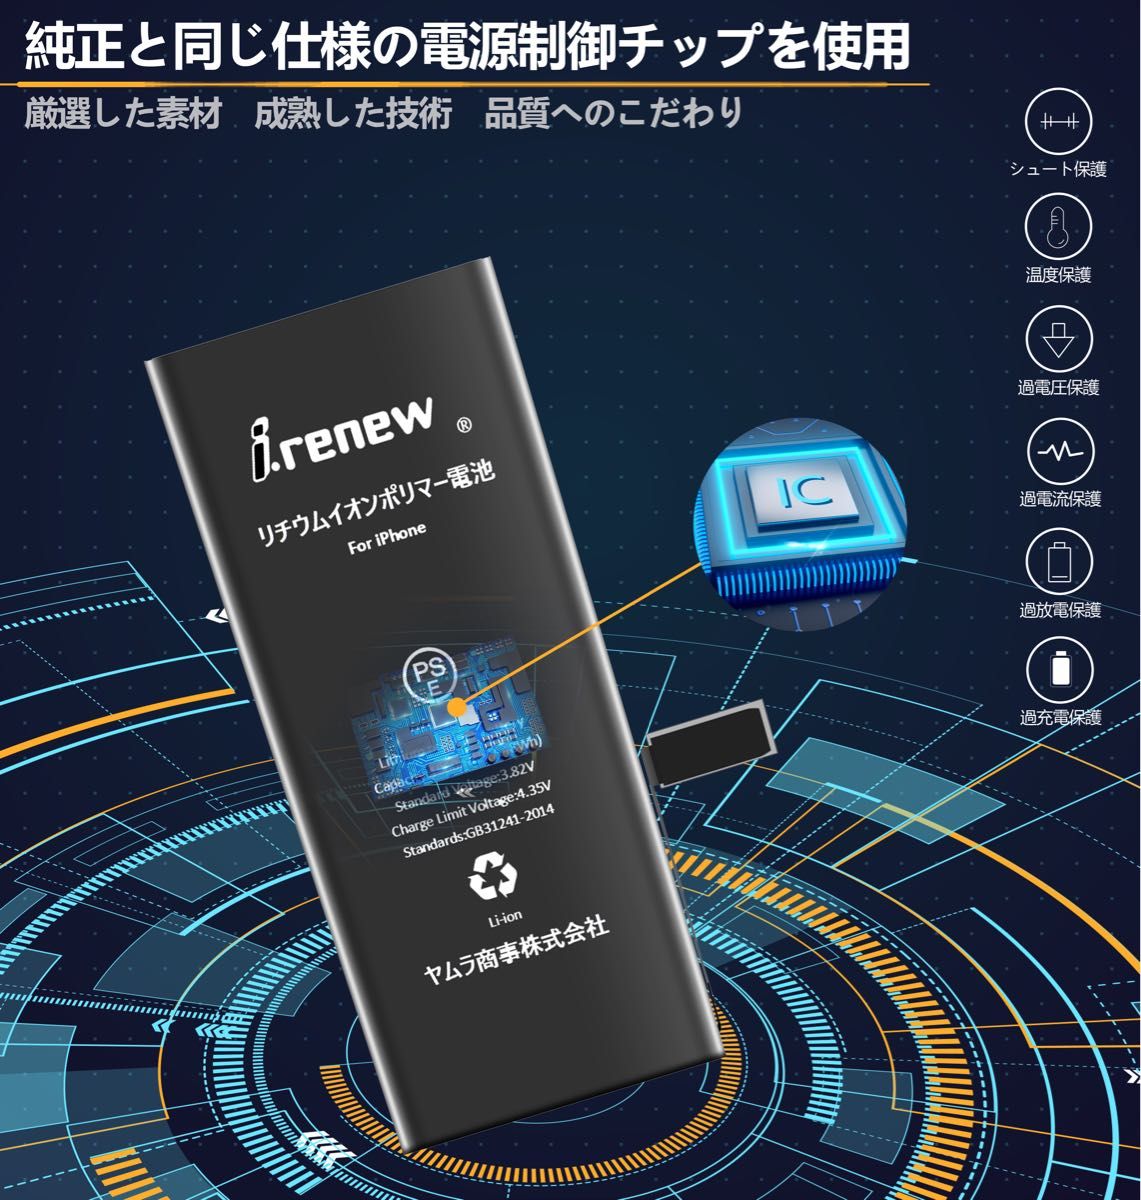 【新品】iPhone6S 大容量バッテリー 交換用 PSE認証済 工具・保証付